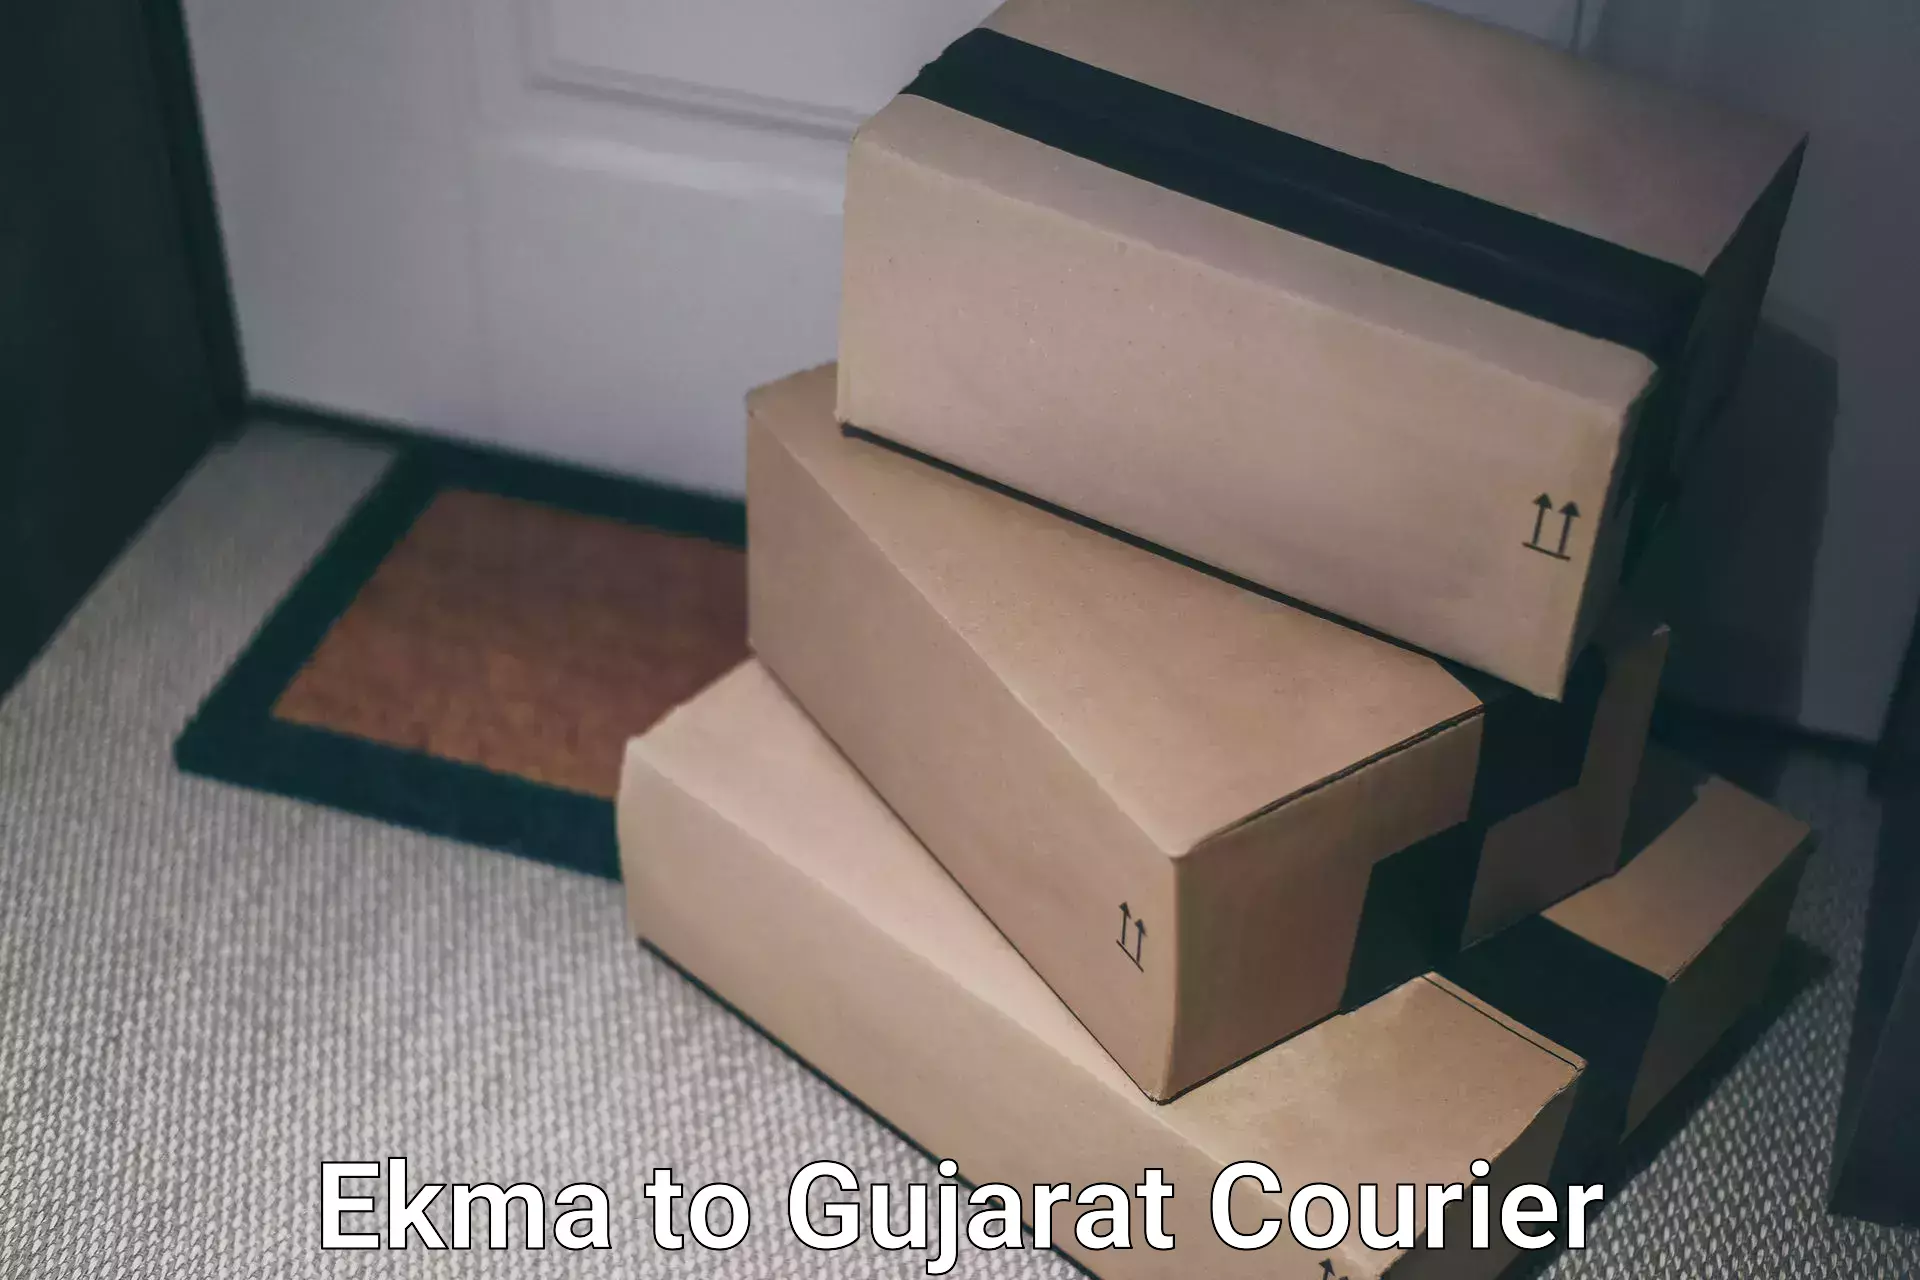 Global logistics network Ekma to Anand